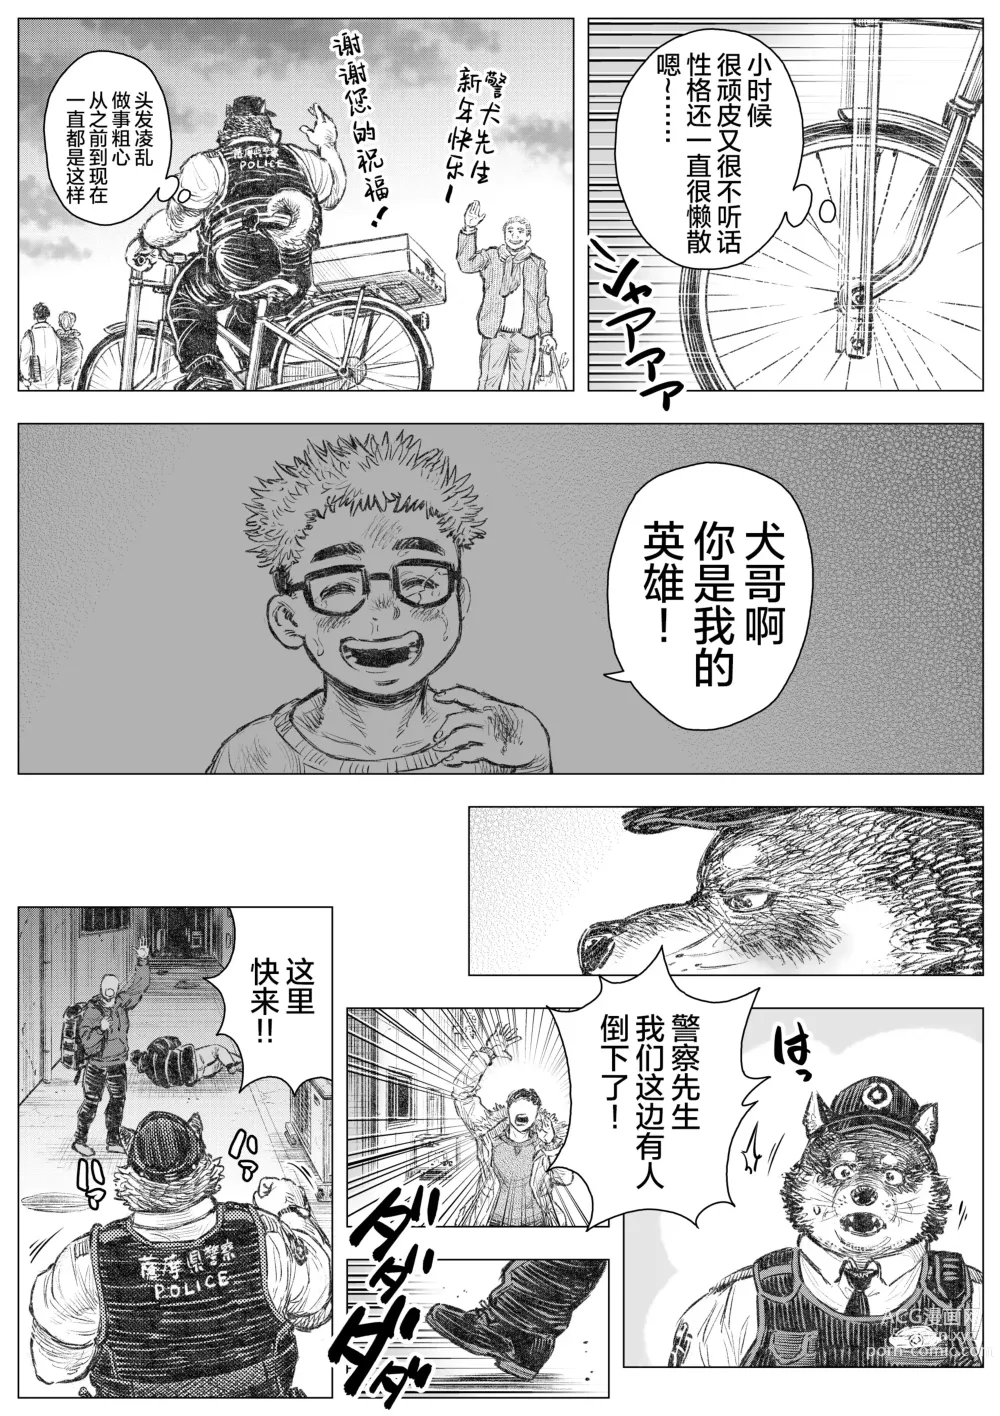 Page 5 of doujinshi 警犬巡查队队长①